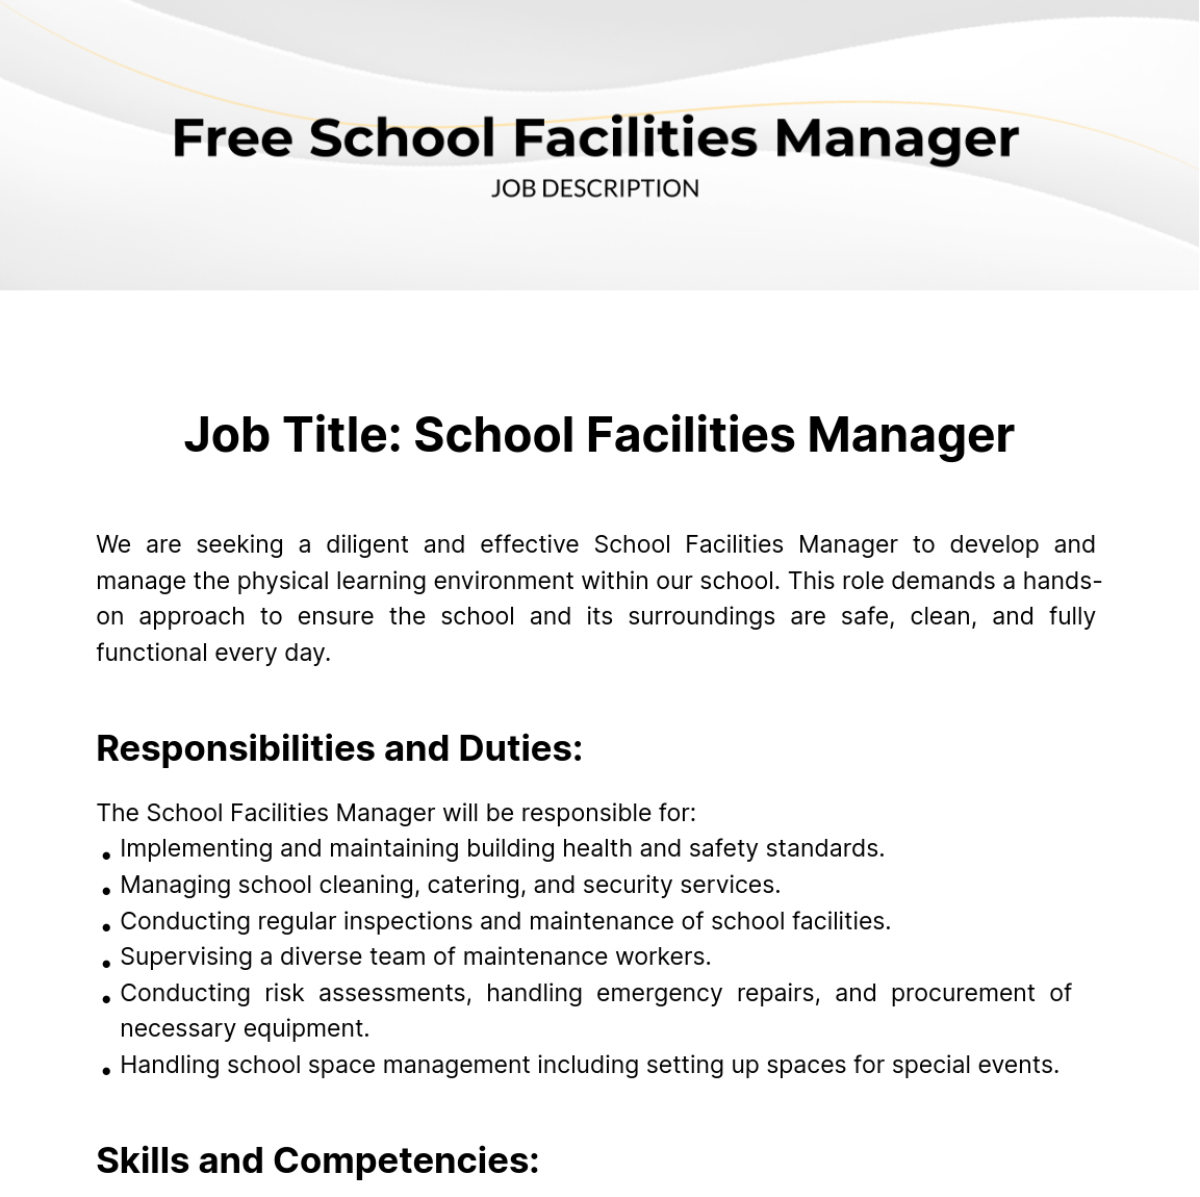 Free School Facilities Manager Job Description Template